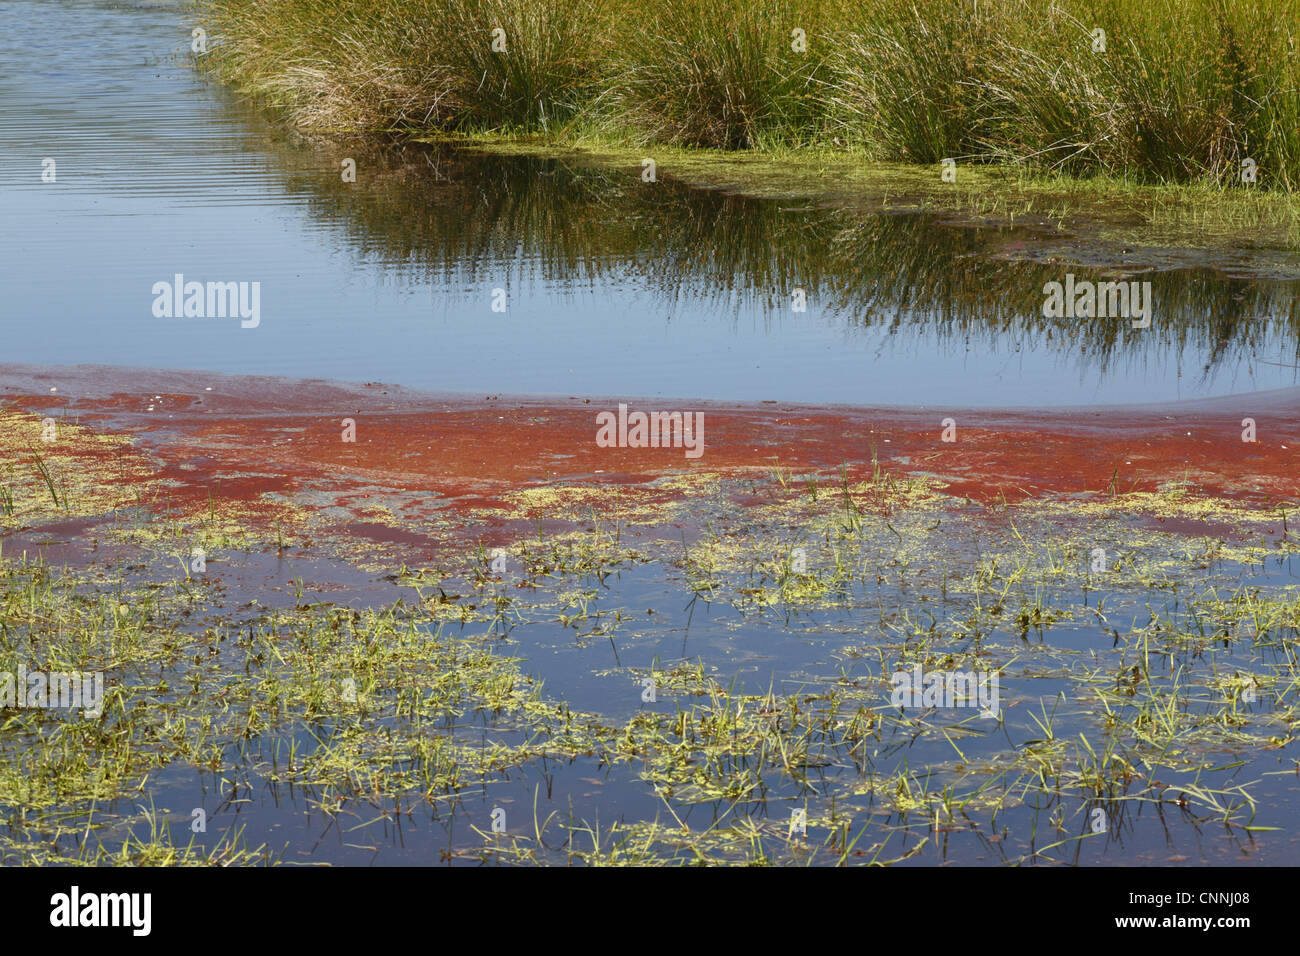 Red Cyanobacteria (Cyanobacteria sp.) forming scum on pool in freshwater marsh, Ceredigion, Wales, june Stock Photo